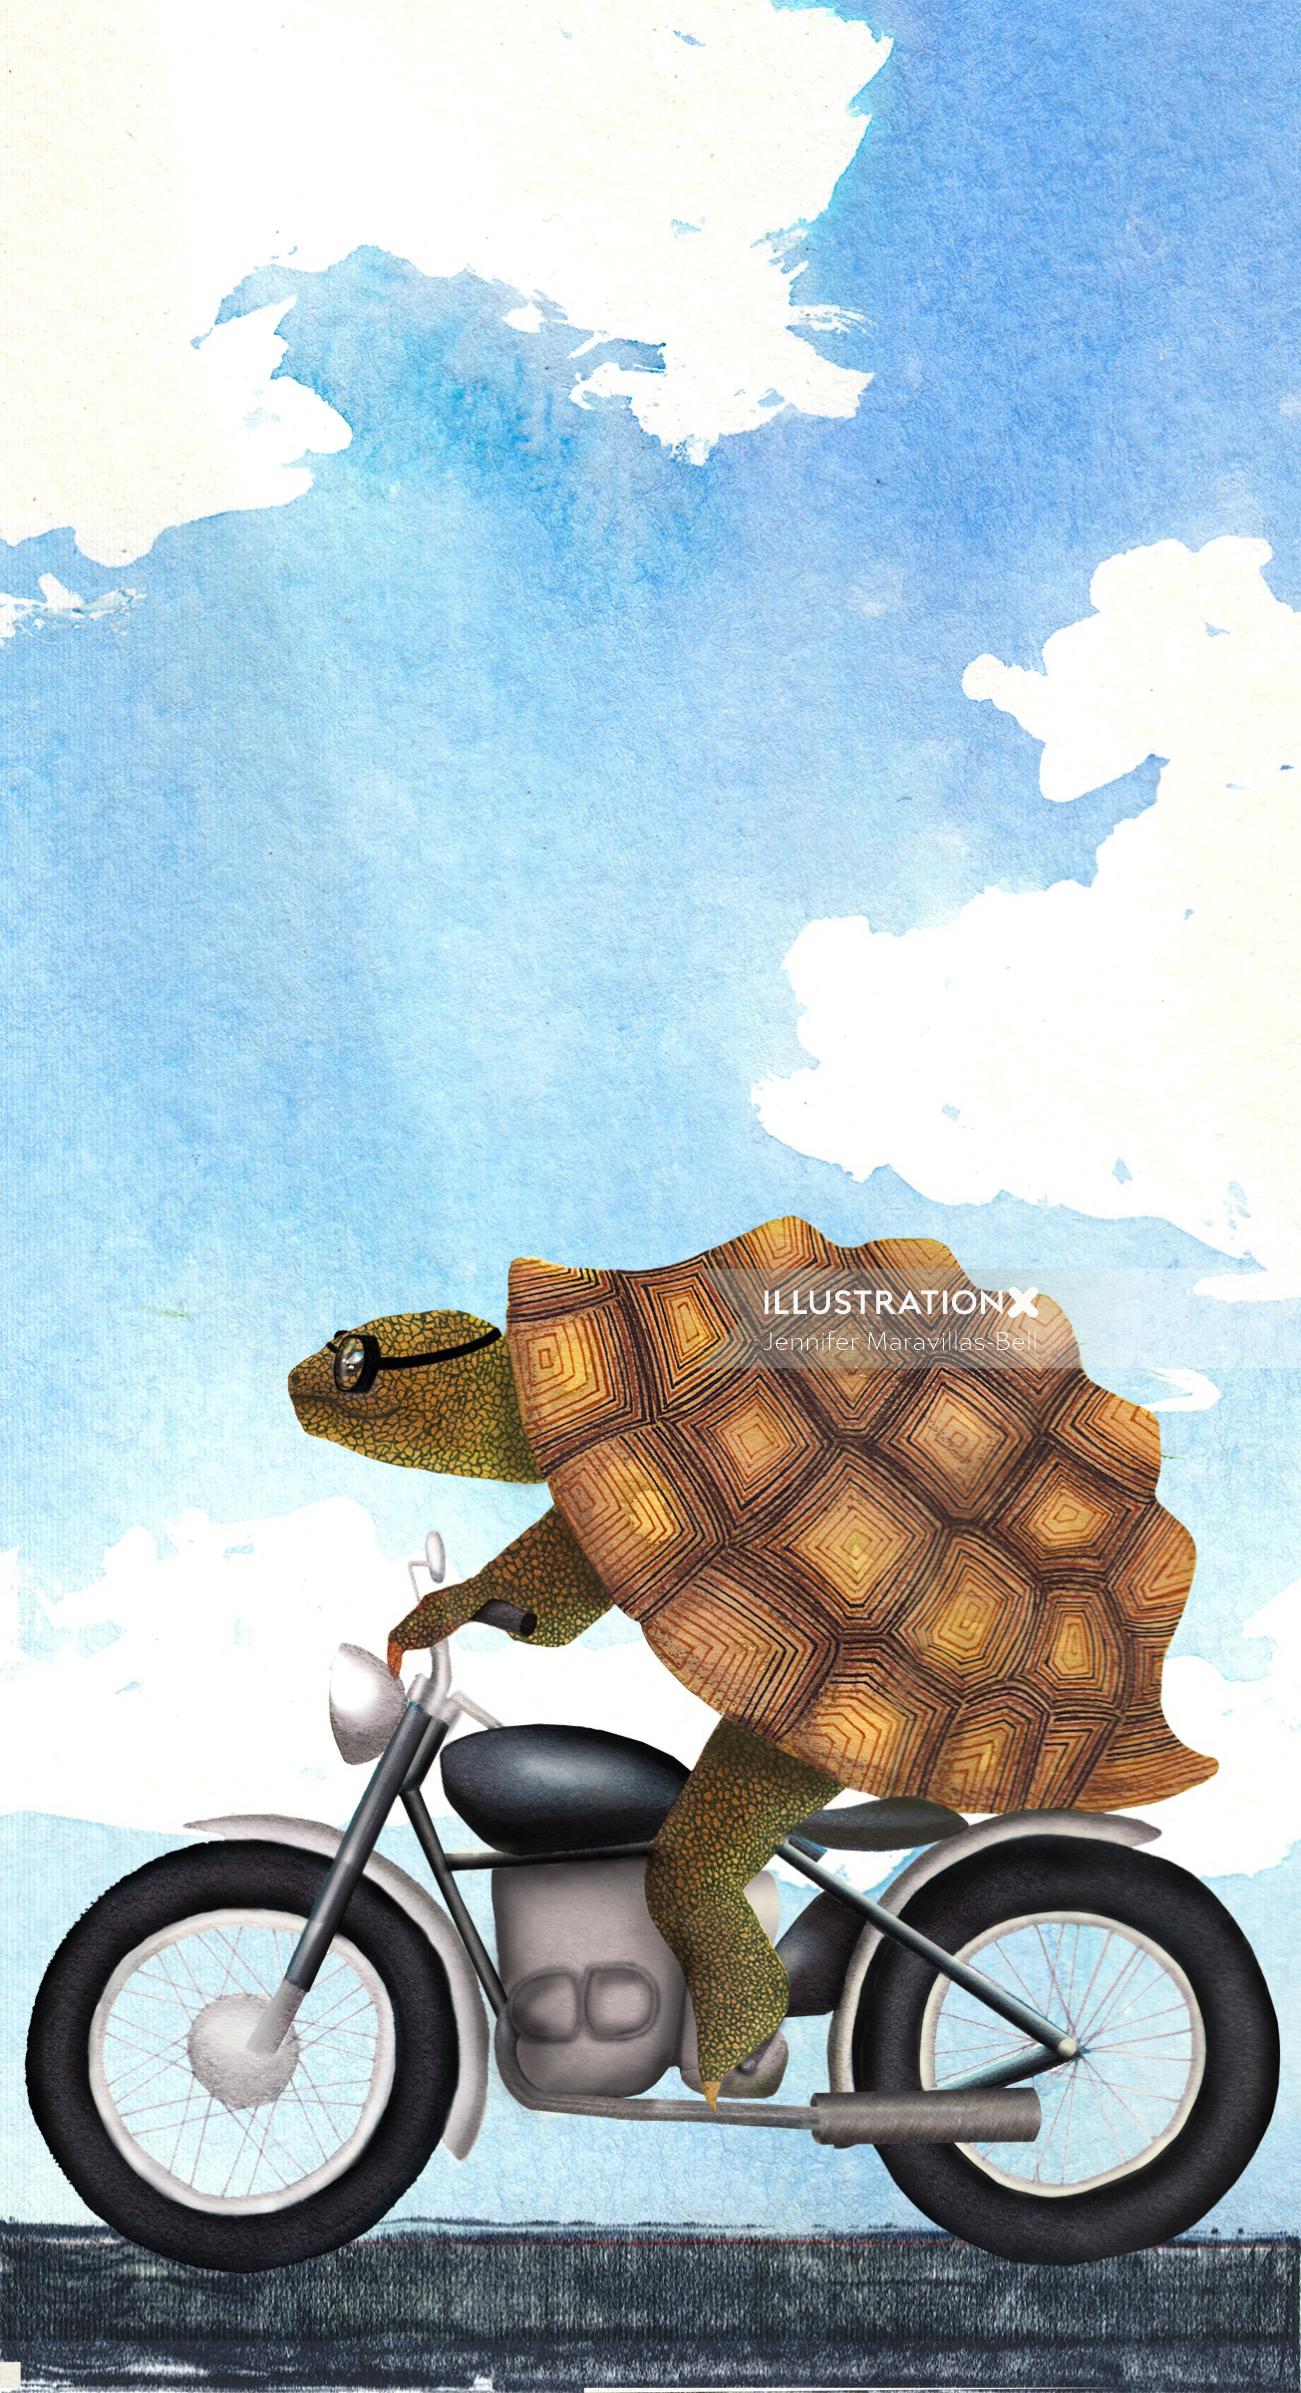 An illustration of Tortoise on motorcycle